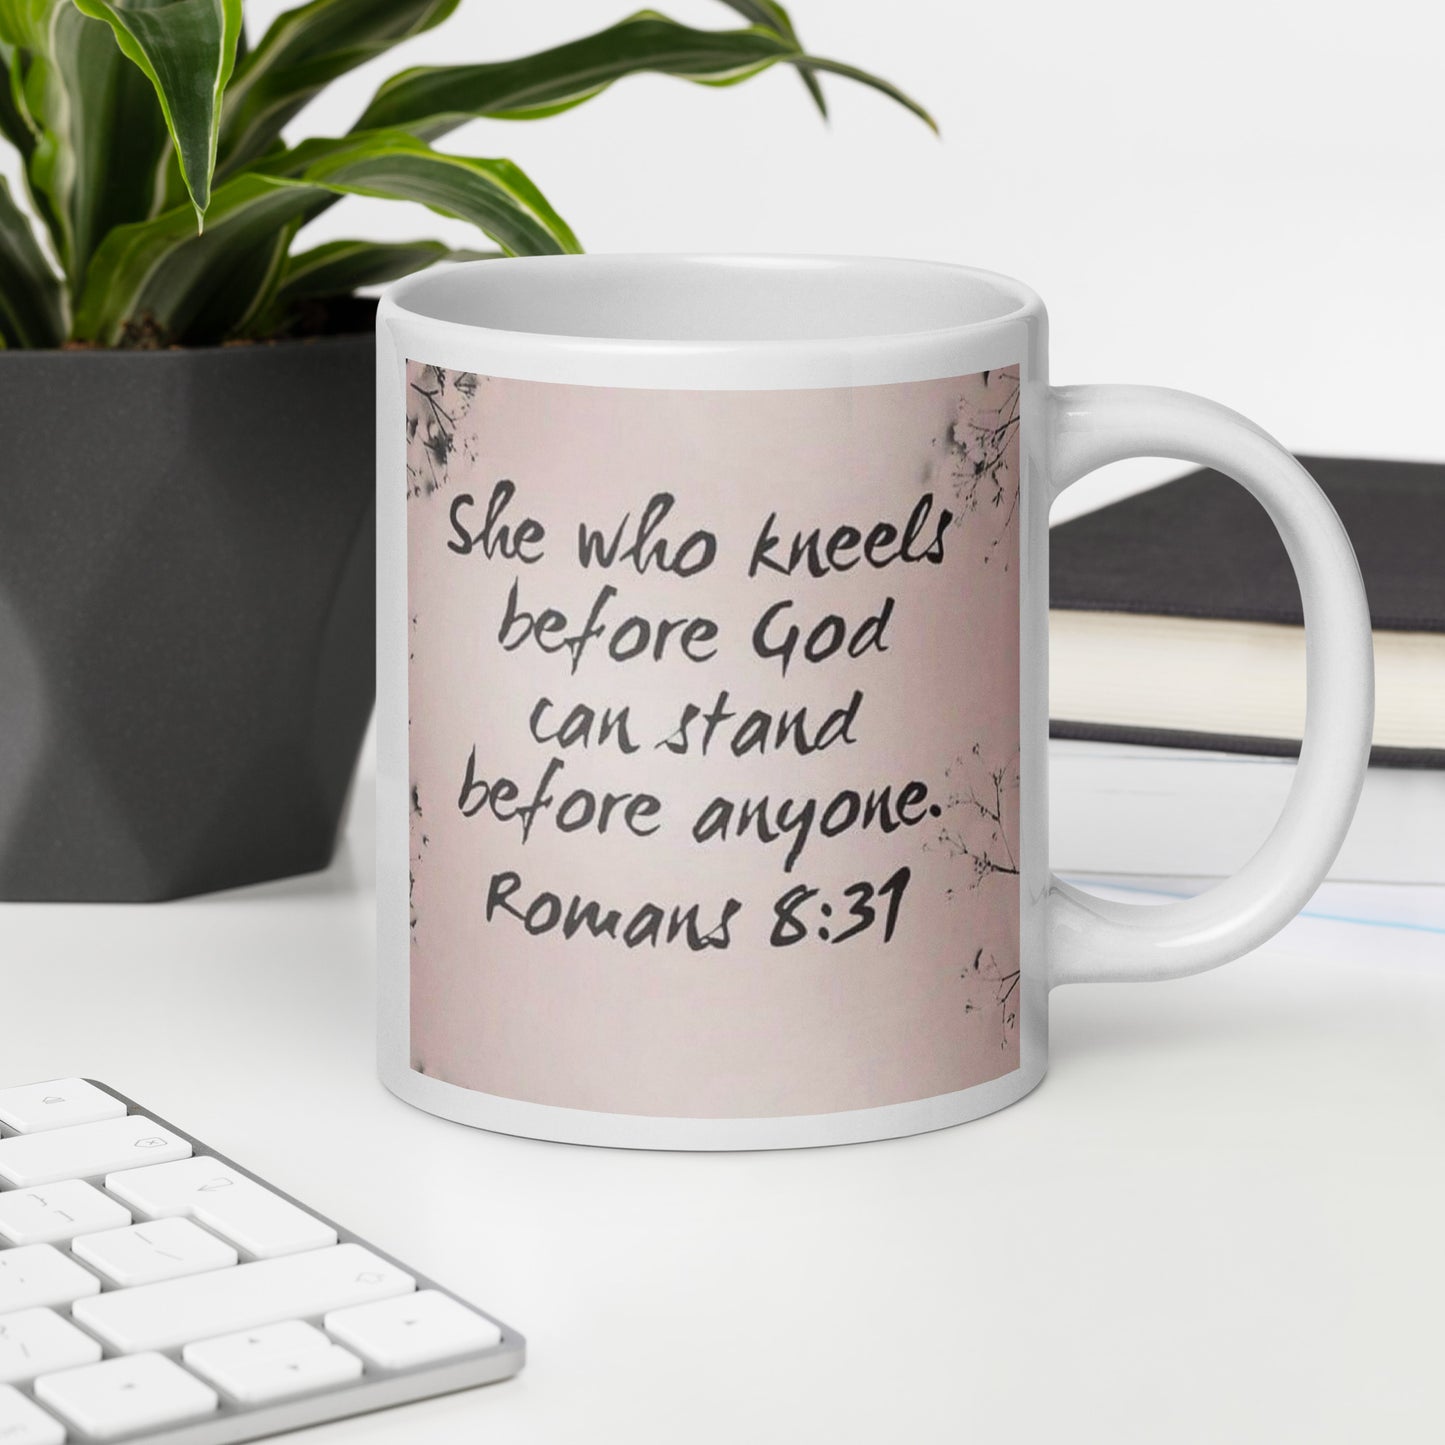 Romans 8:31 White glossy mug